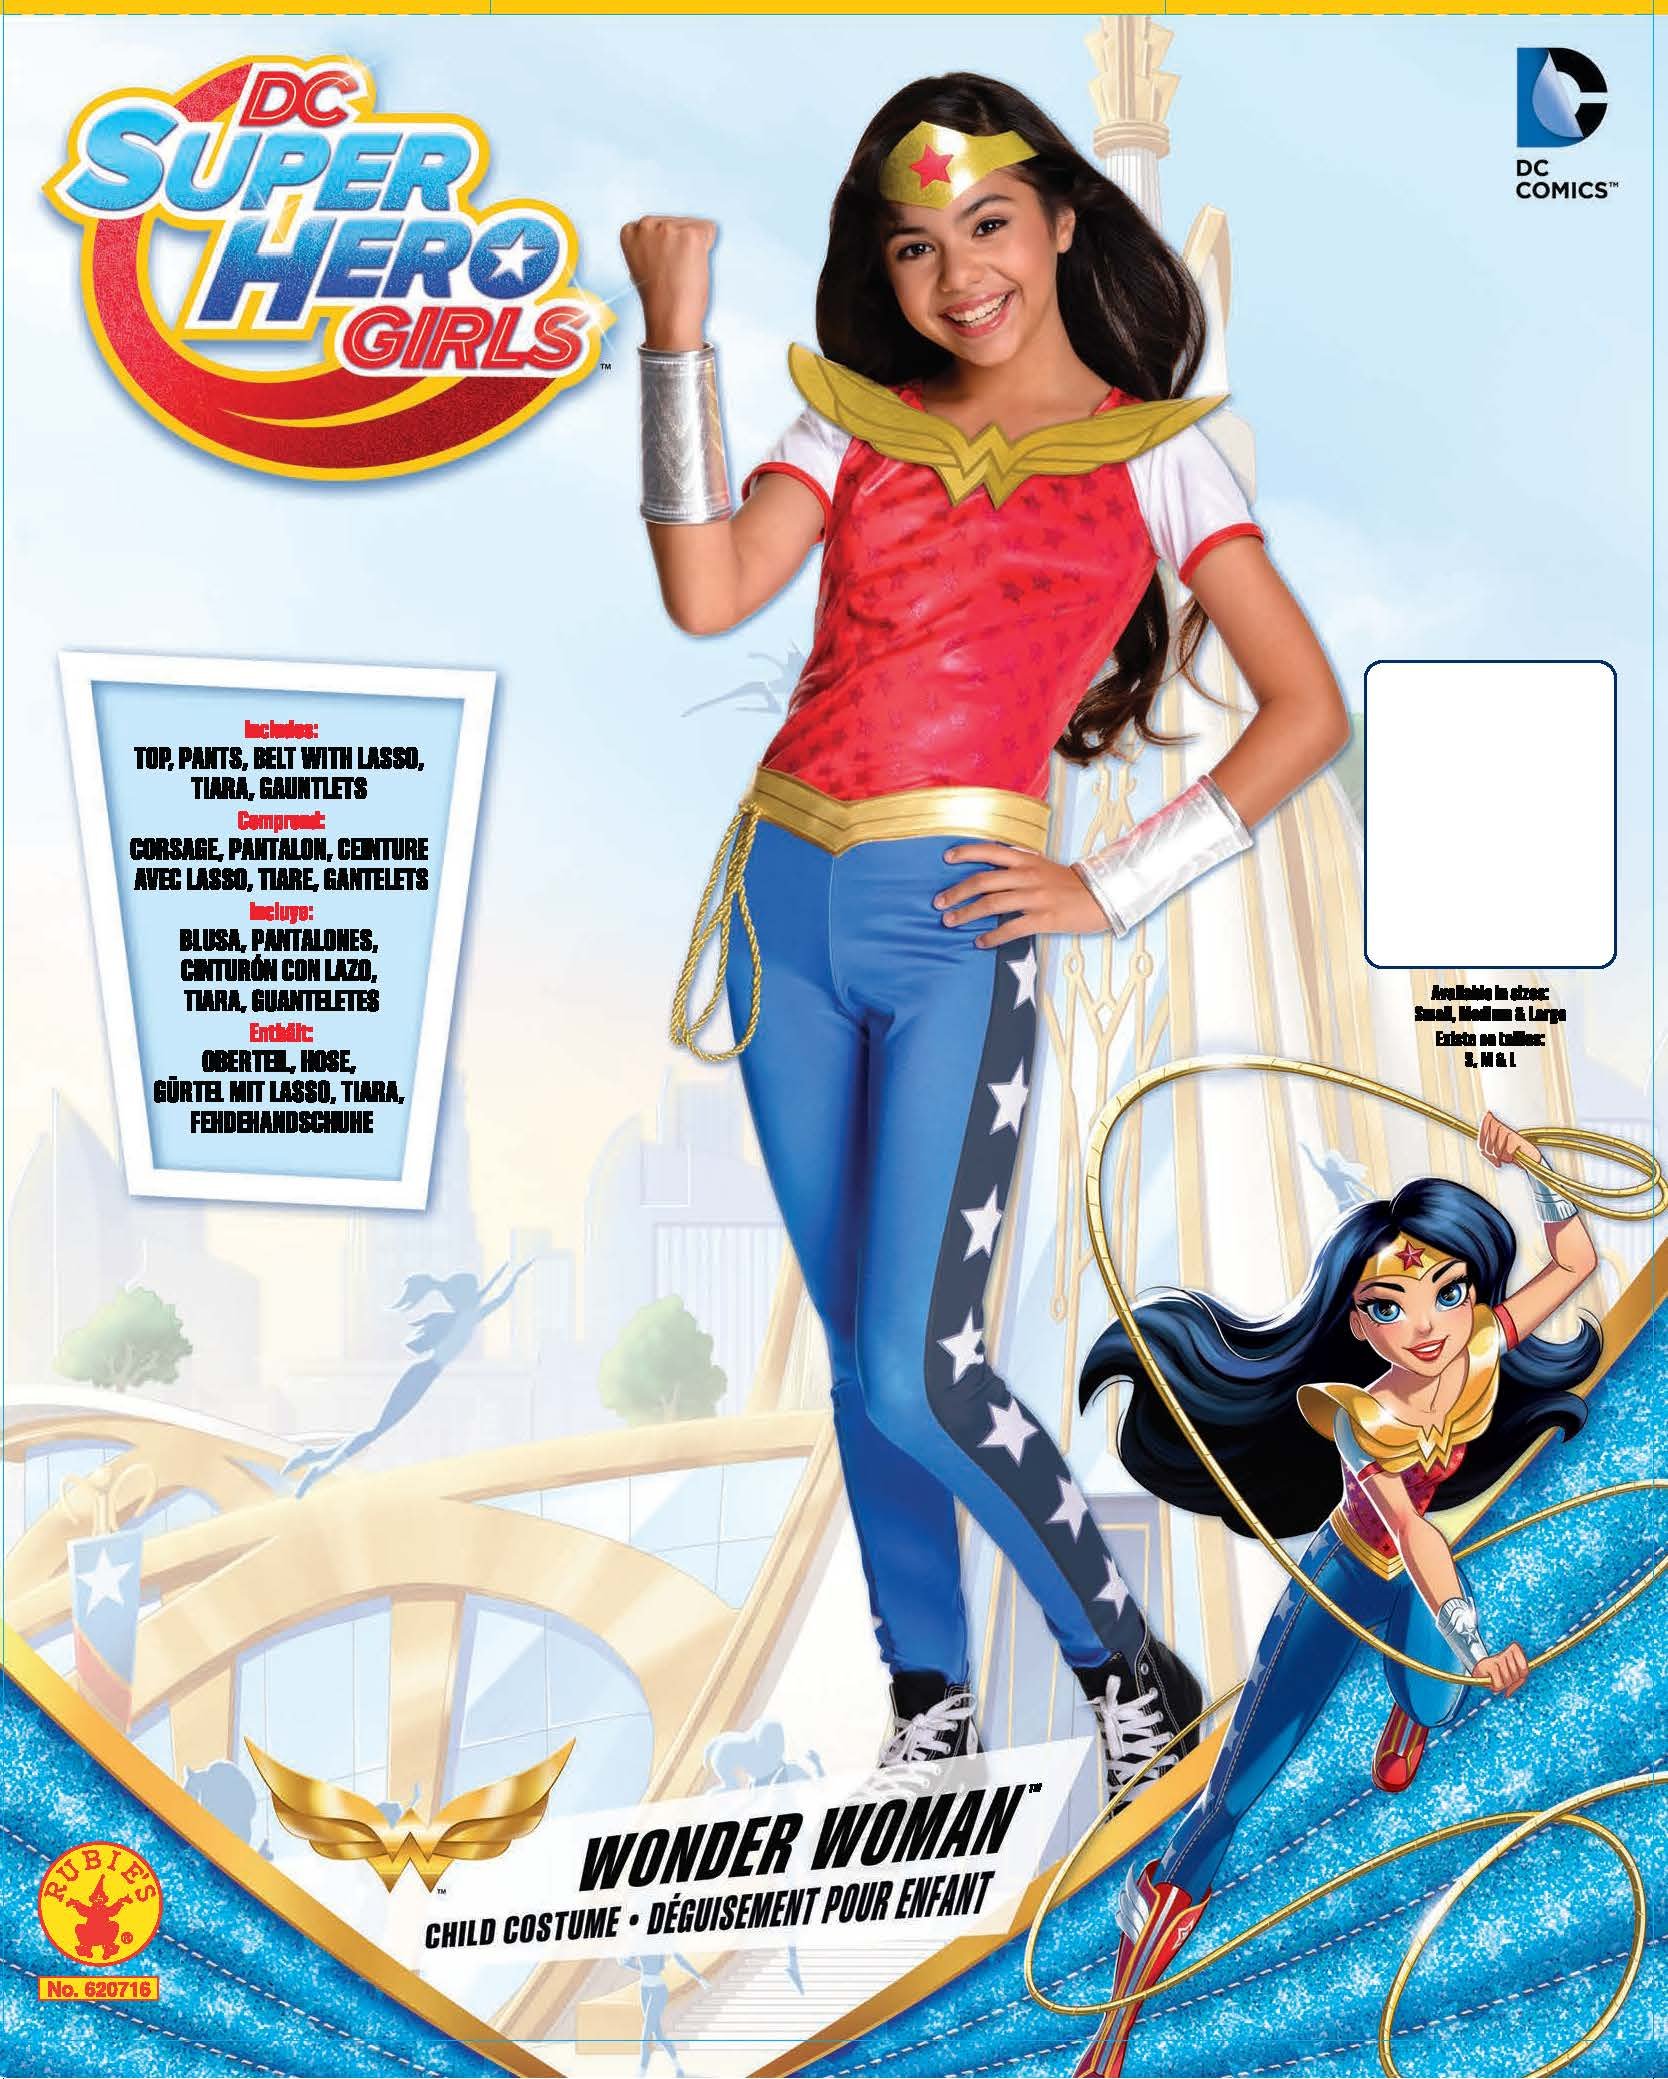 Rubie's Costume Kids DC Superhero Girls Deluxe Wonder Woman Costume Red/Blue, Small